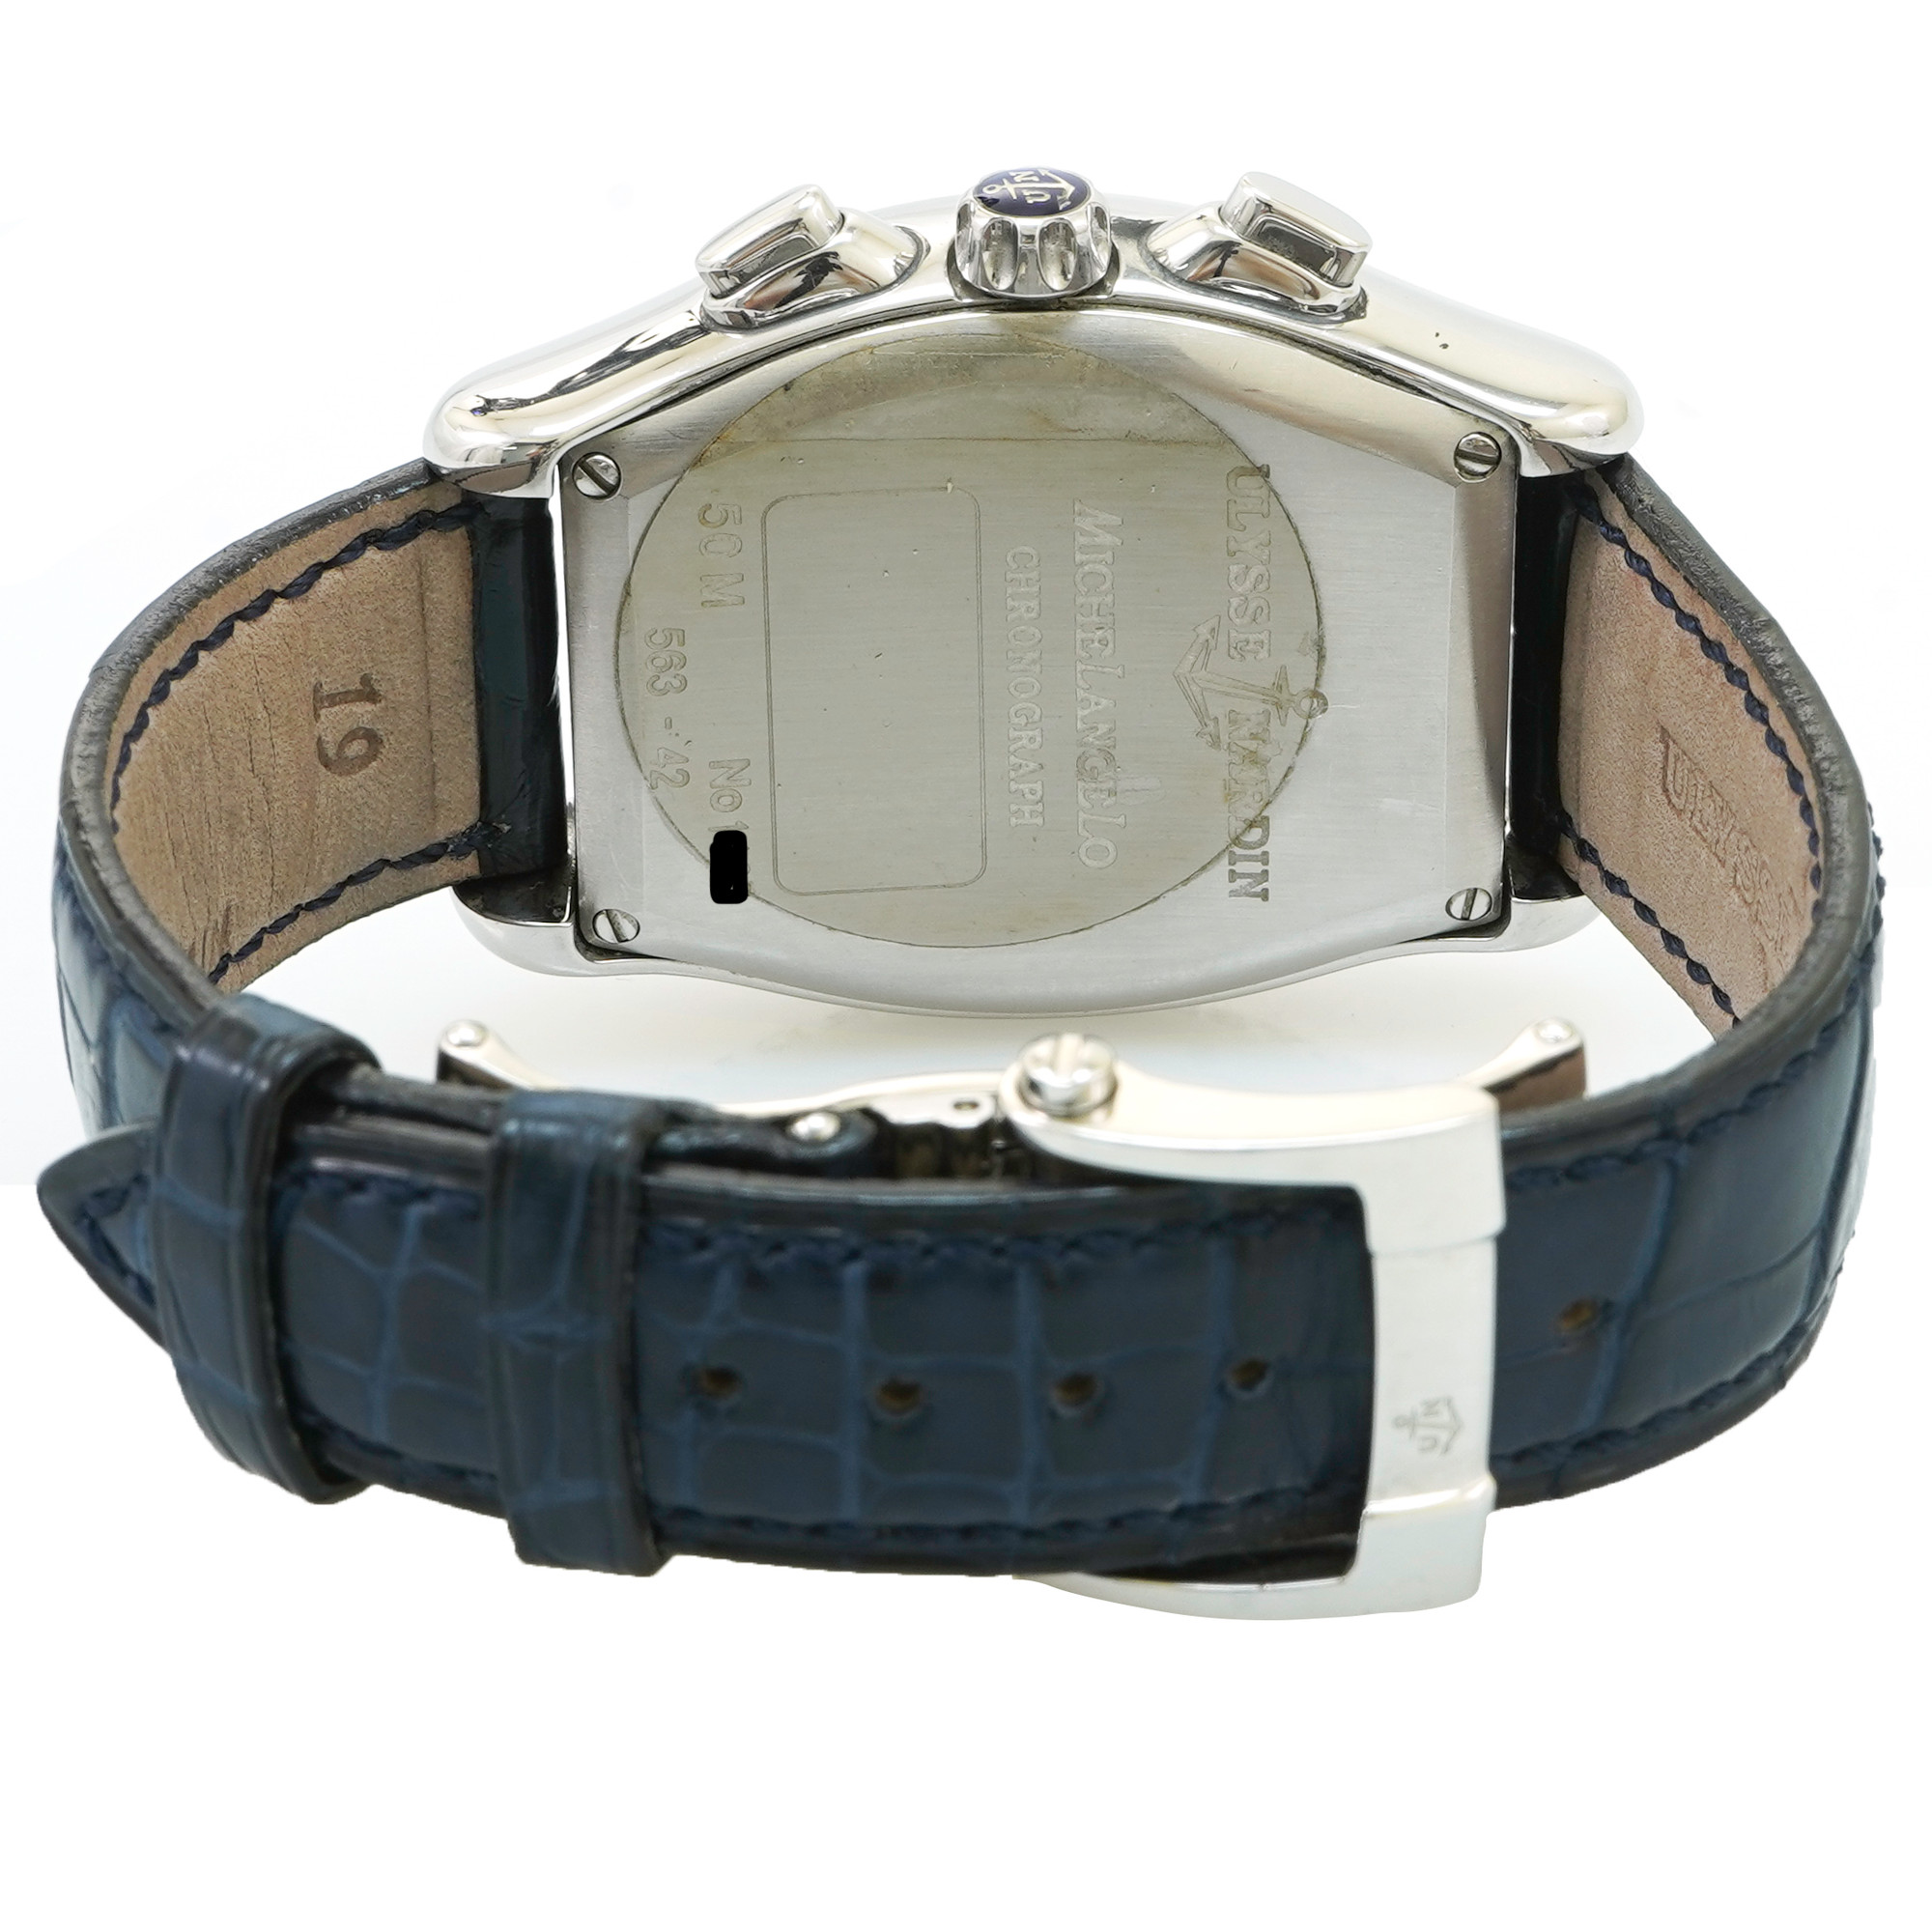 Ulysse Nardin Michelangelo Chronograph 563-42/53 *Blue Dial* - Inventory 4851